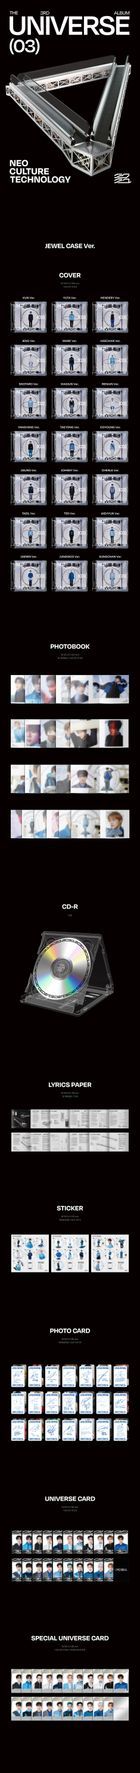 NCT Vol. 3 - Universe (Jewel Case Version) (Tae Yong Version)